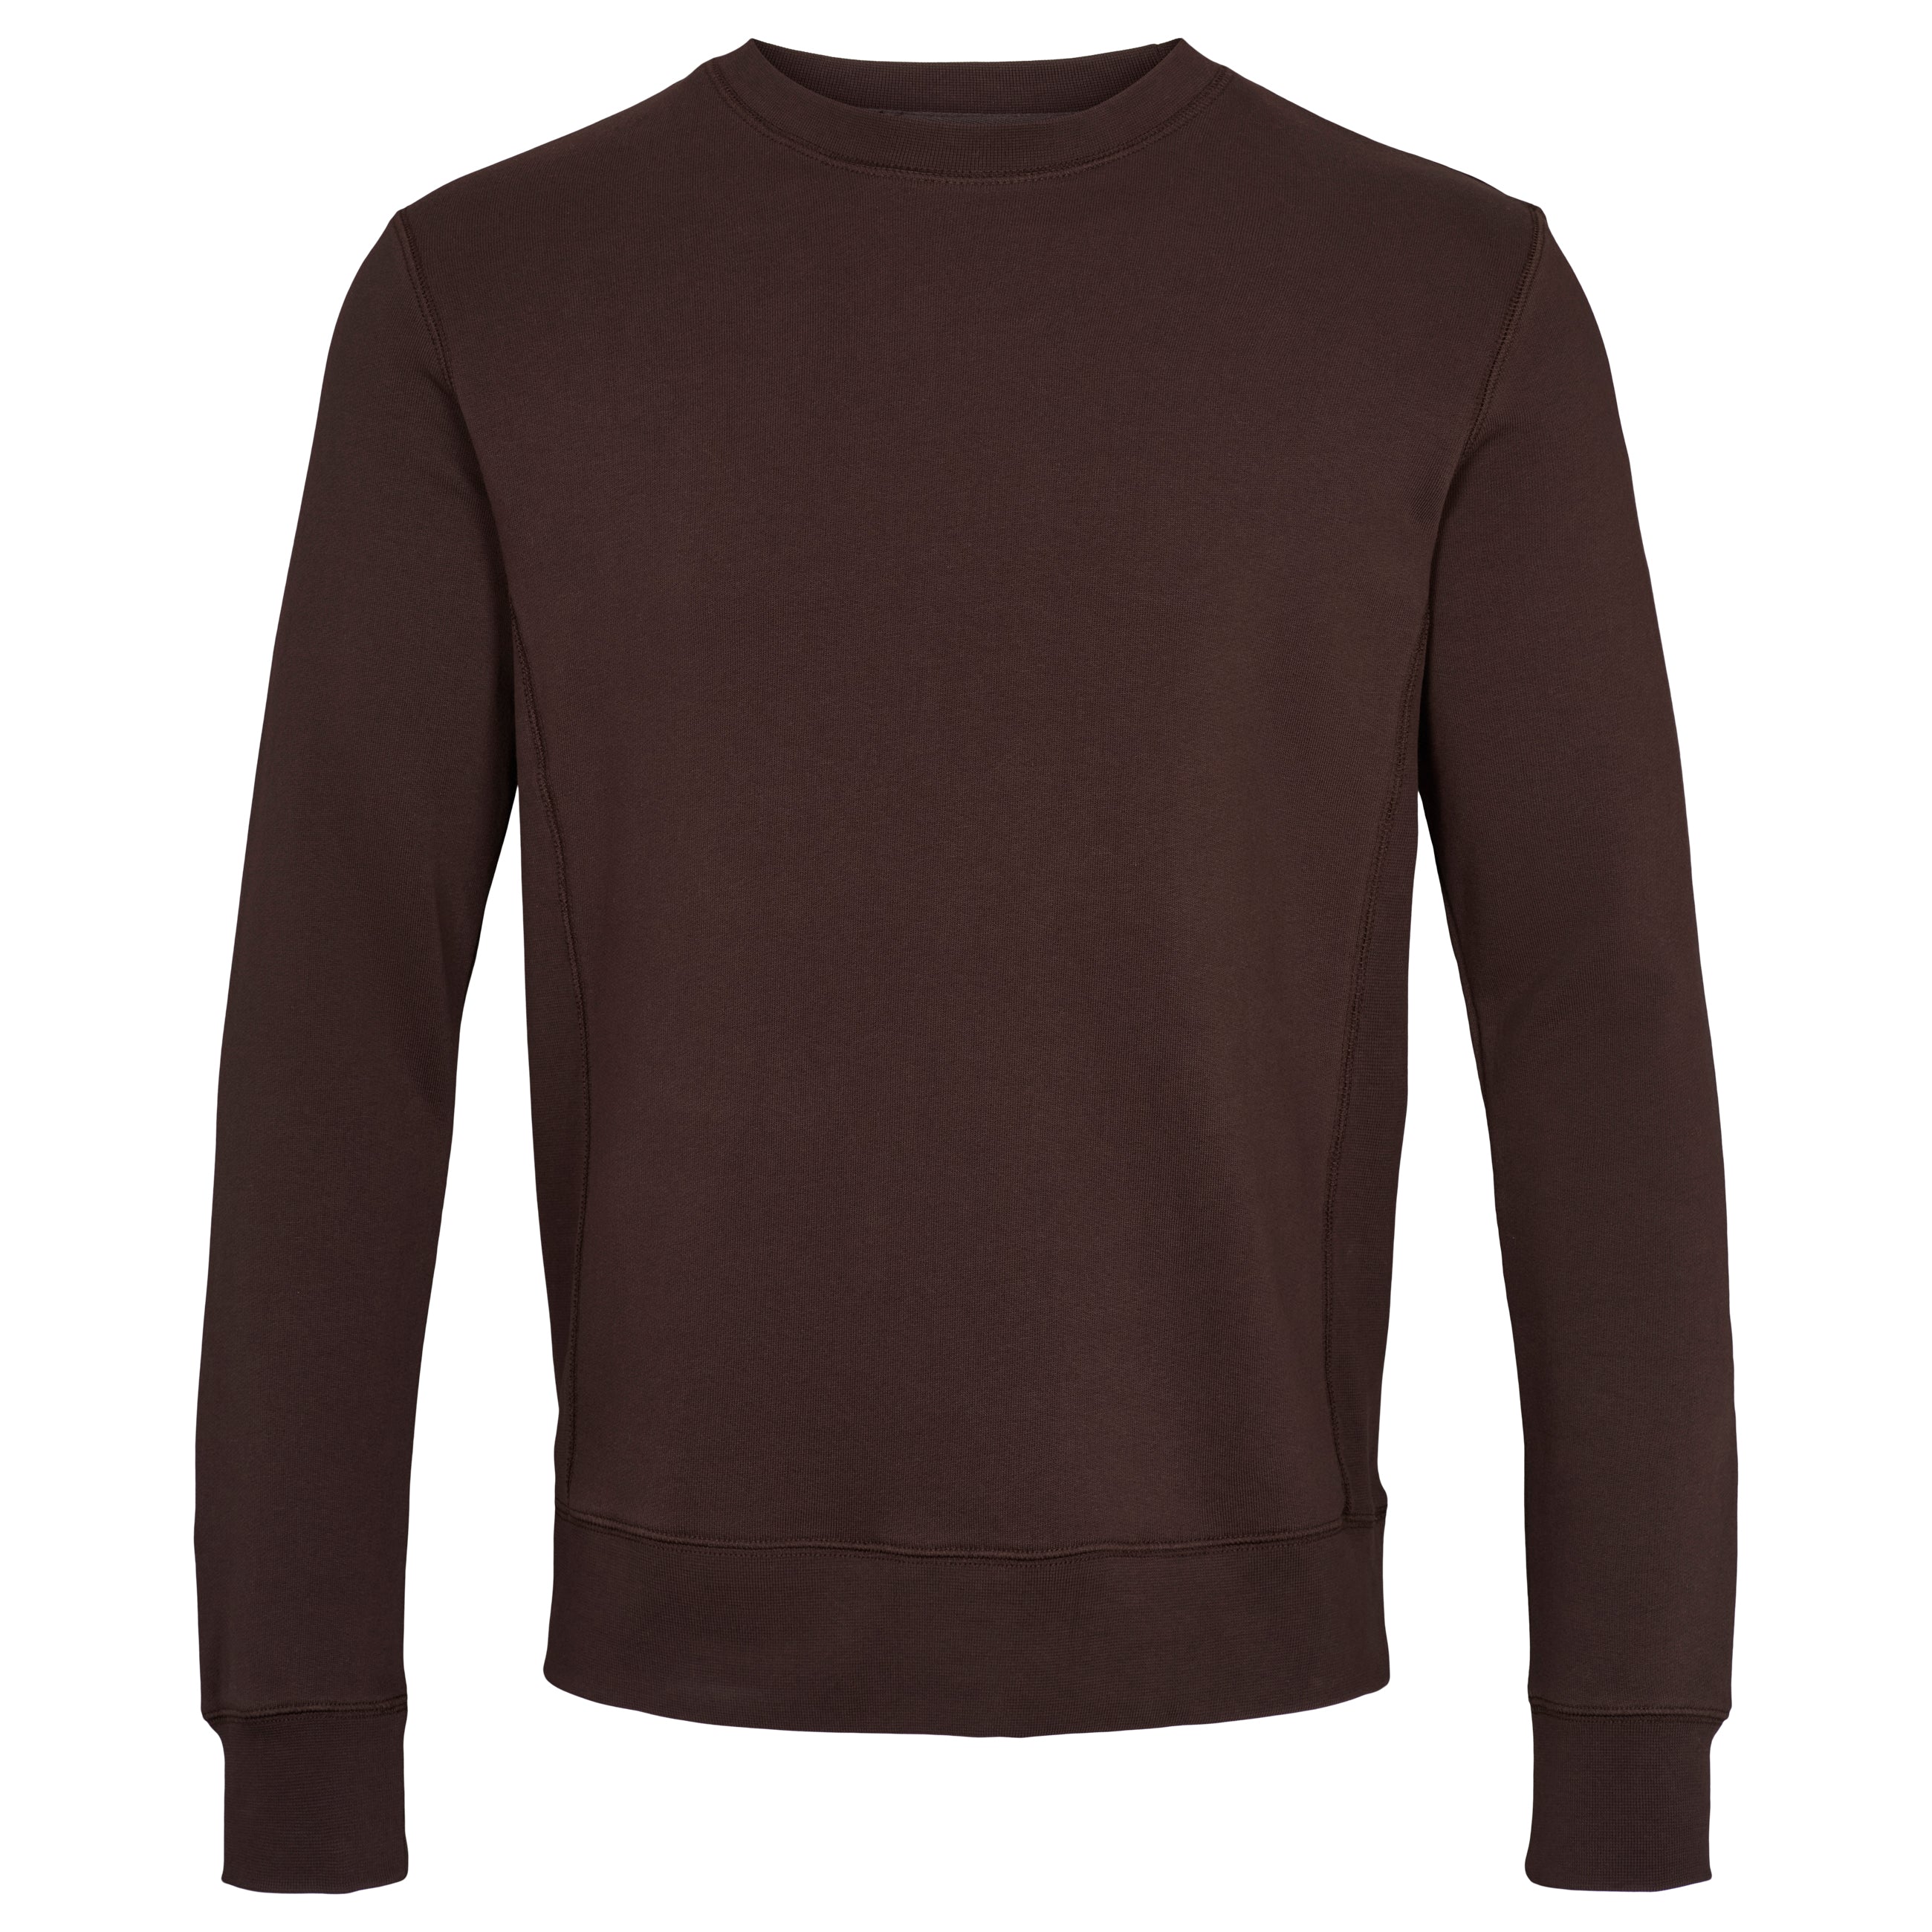 By Garment Makers The Organic Sweatshirt Sweatshirt 3000 Ebony Brown